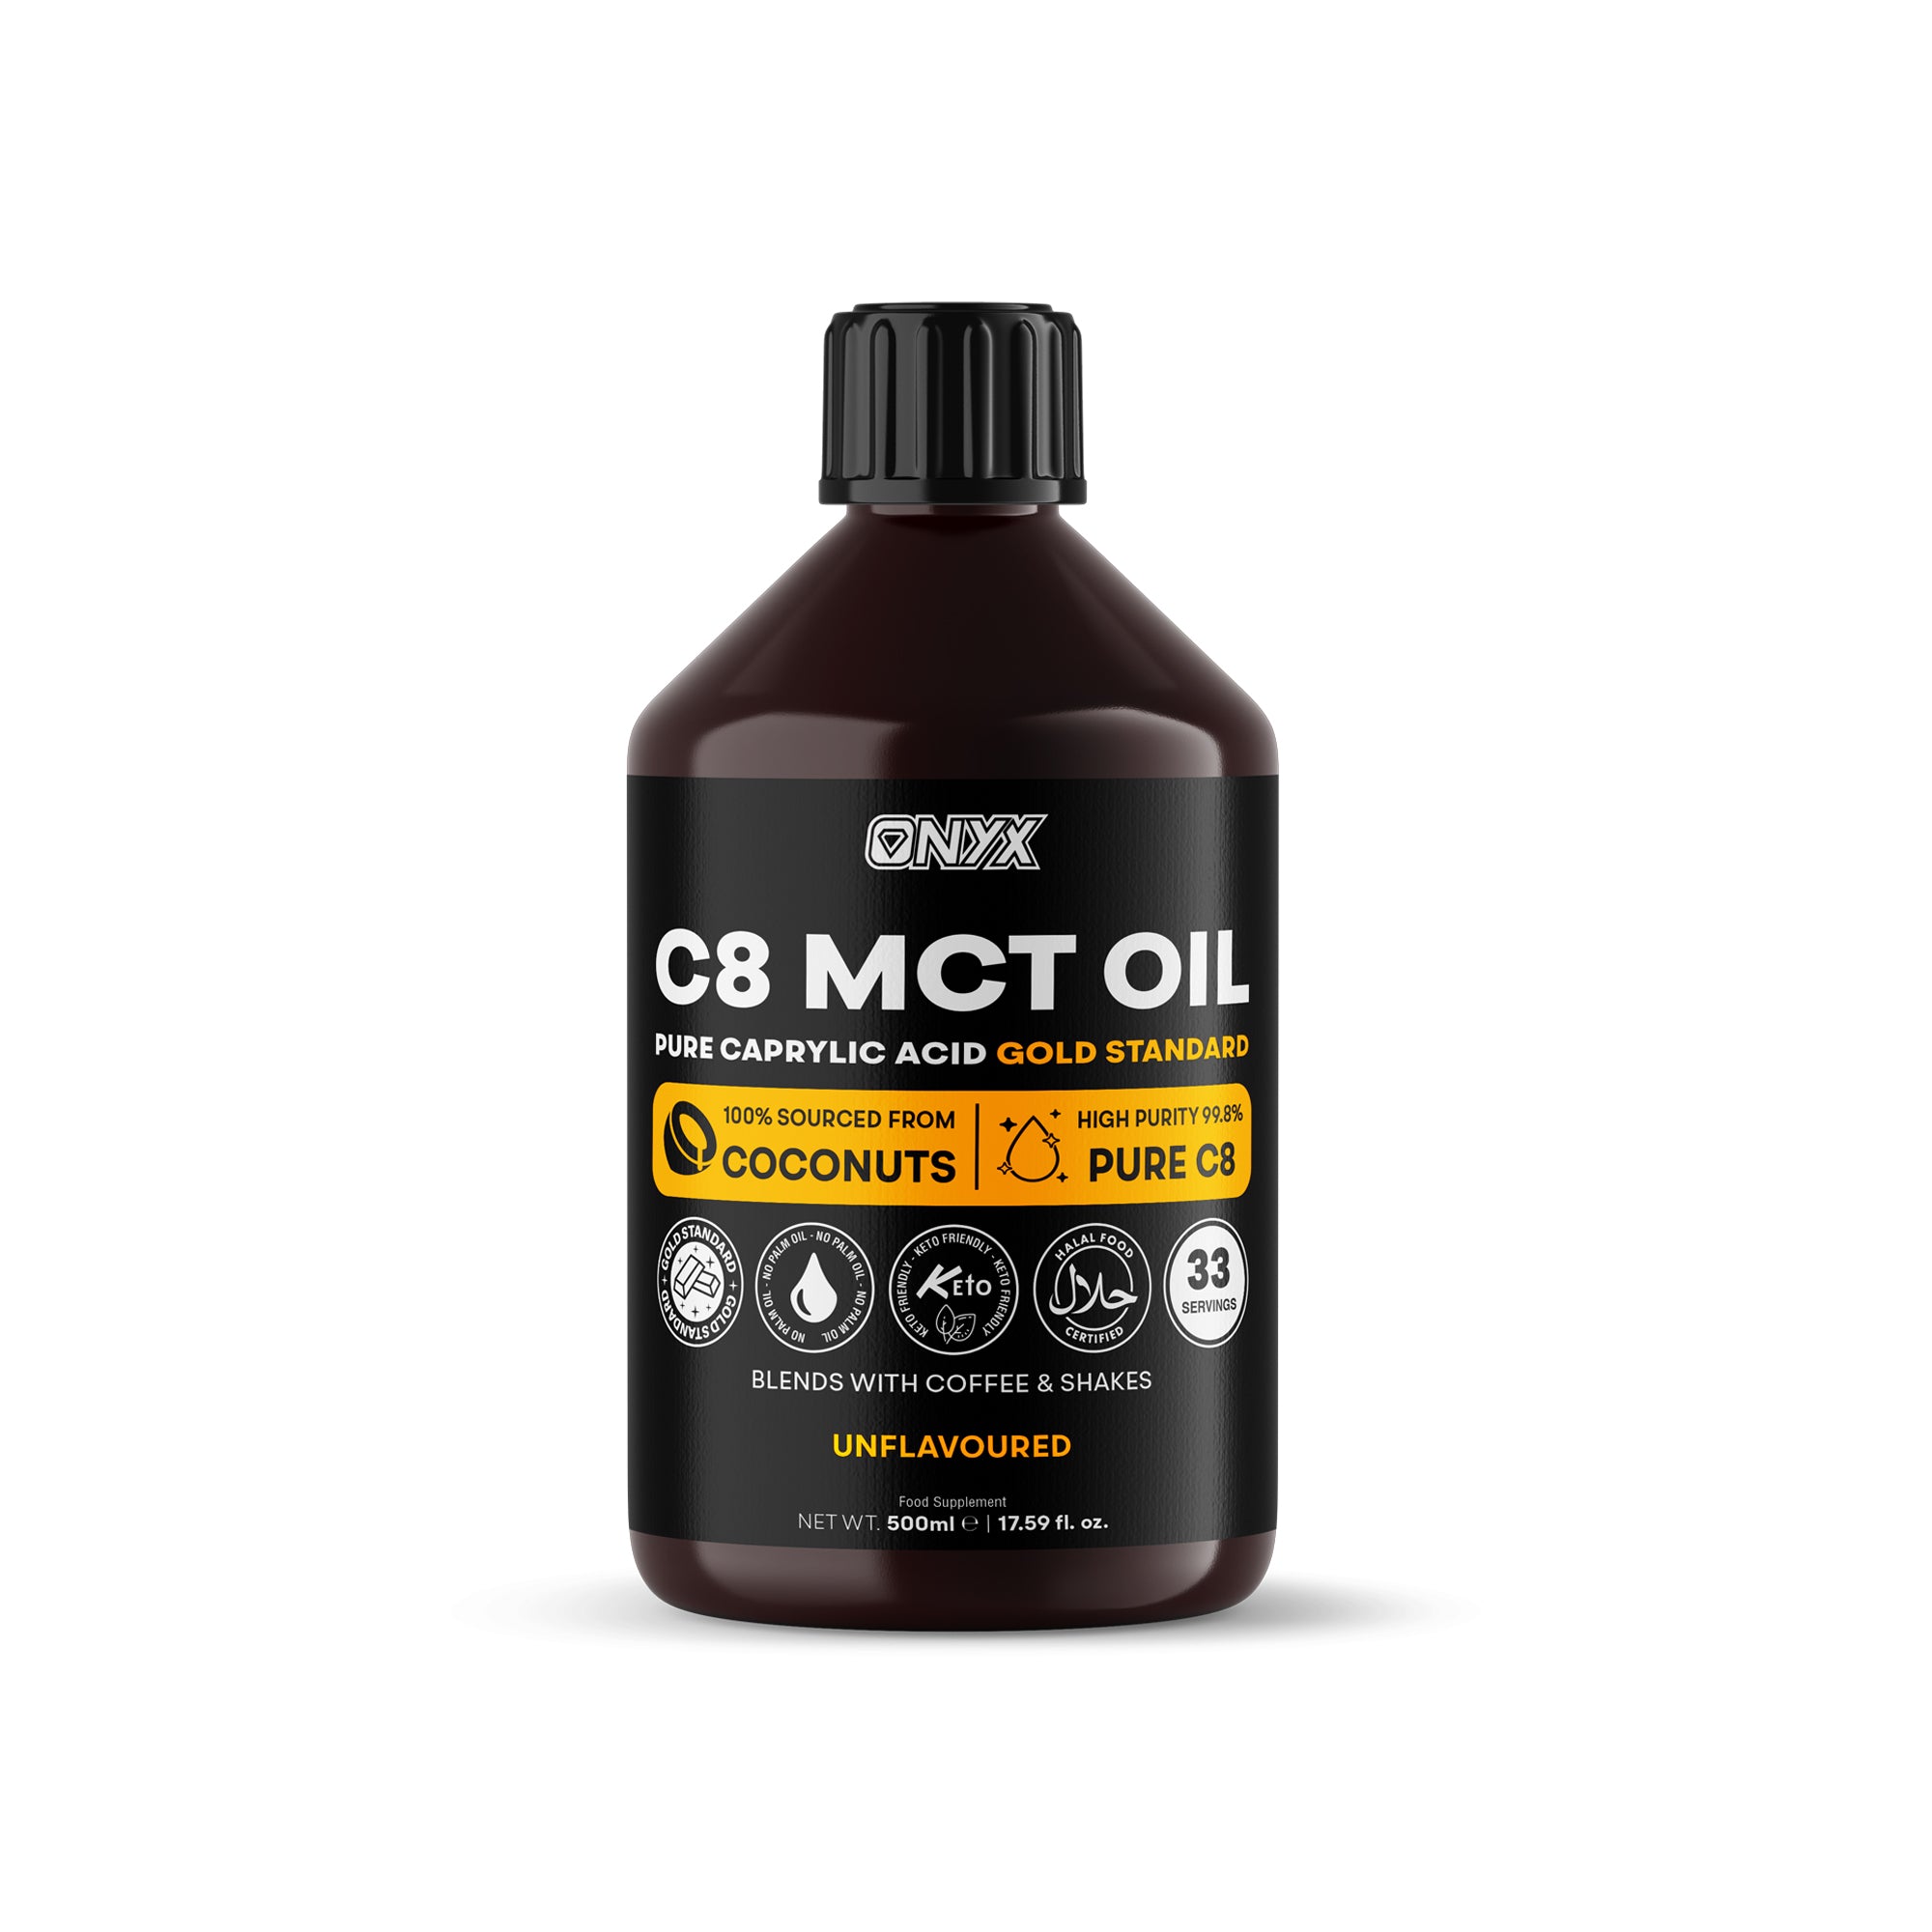 C8 MCT Oil Pure High Potency Caprylic Acid Medium Chain Triglycerides, Premium Coconut Oil